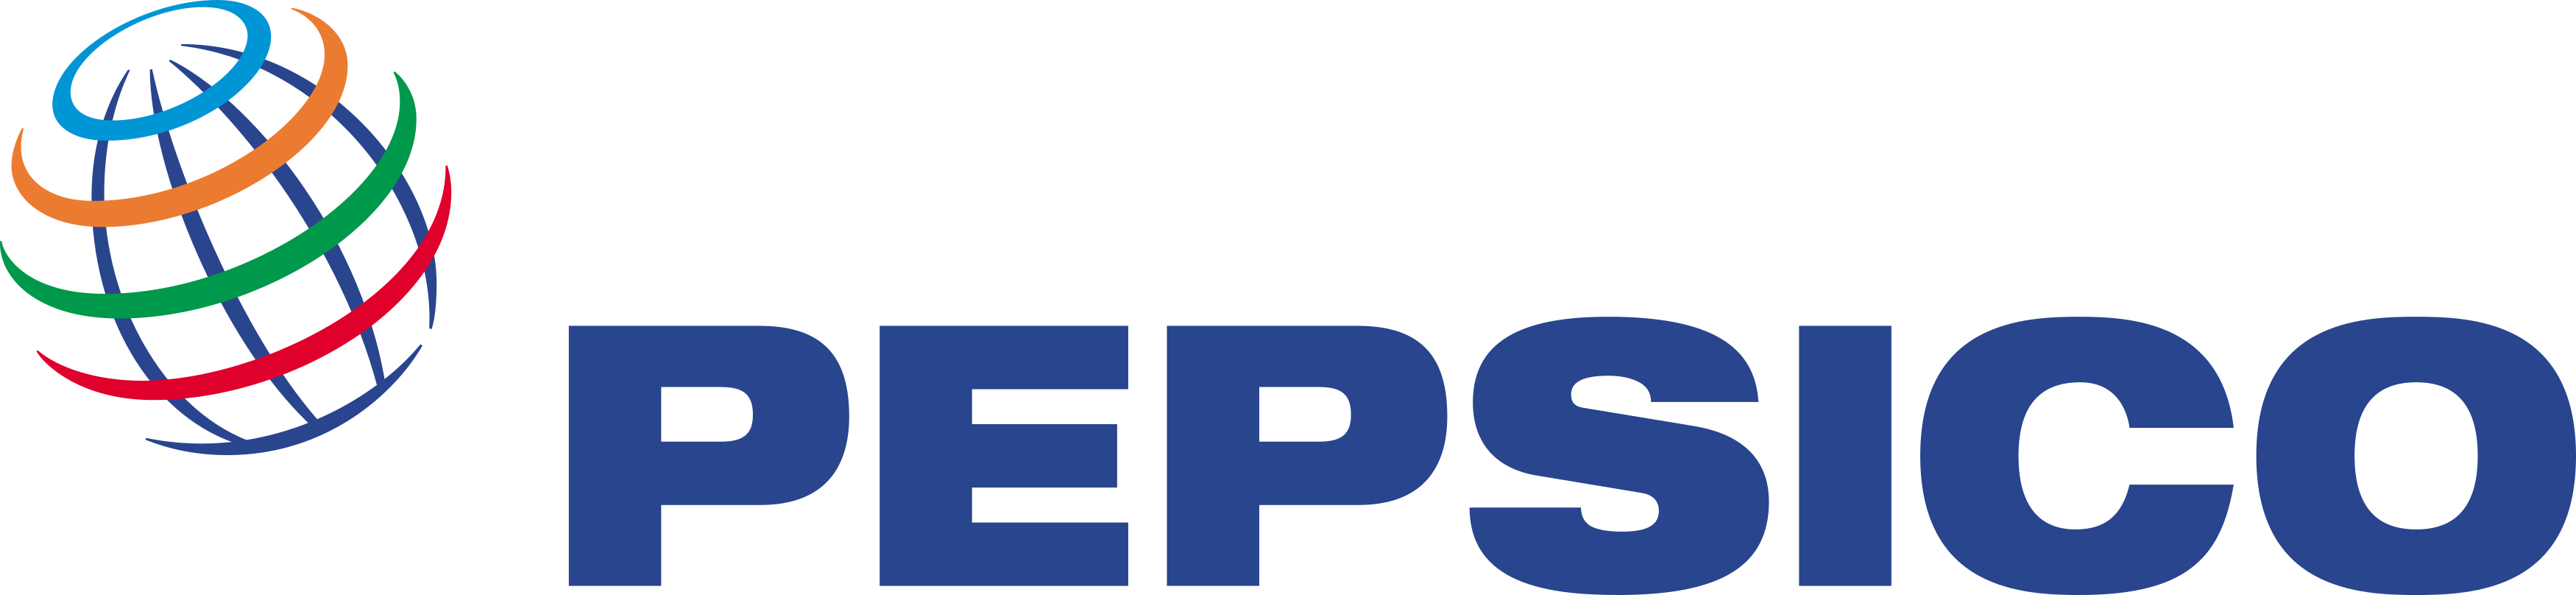 pepsico logo - PepsiCo Logo